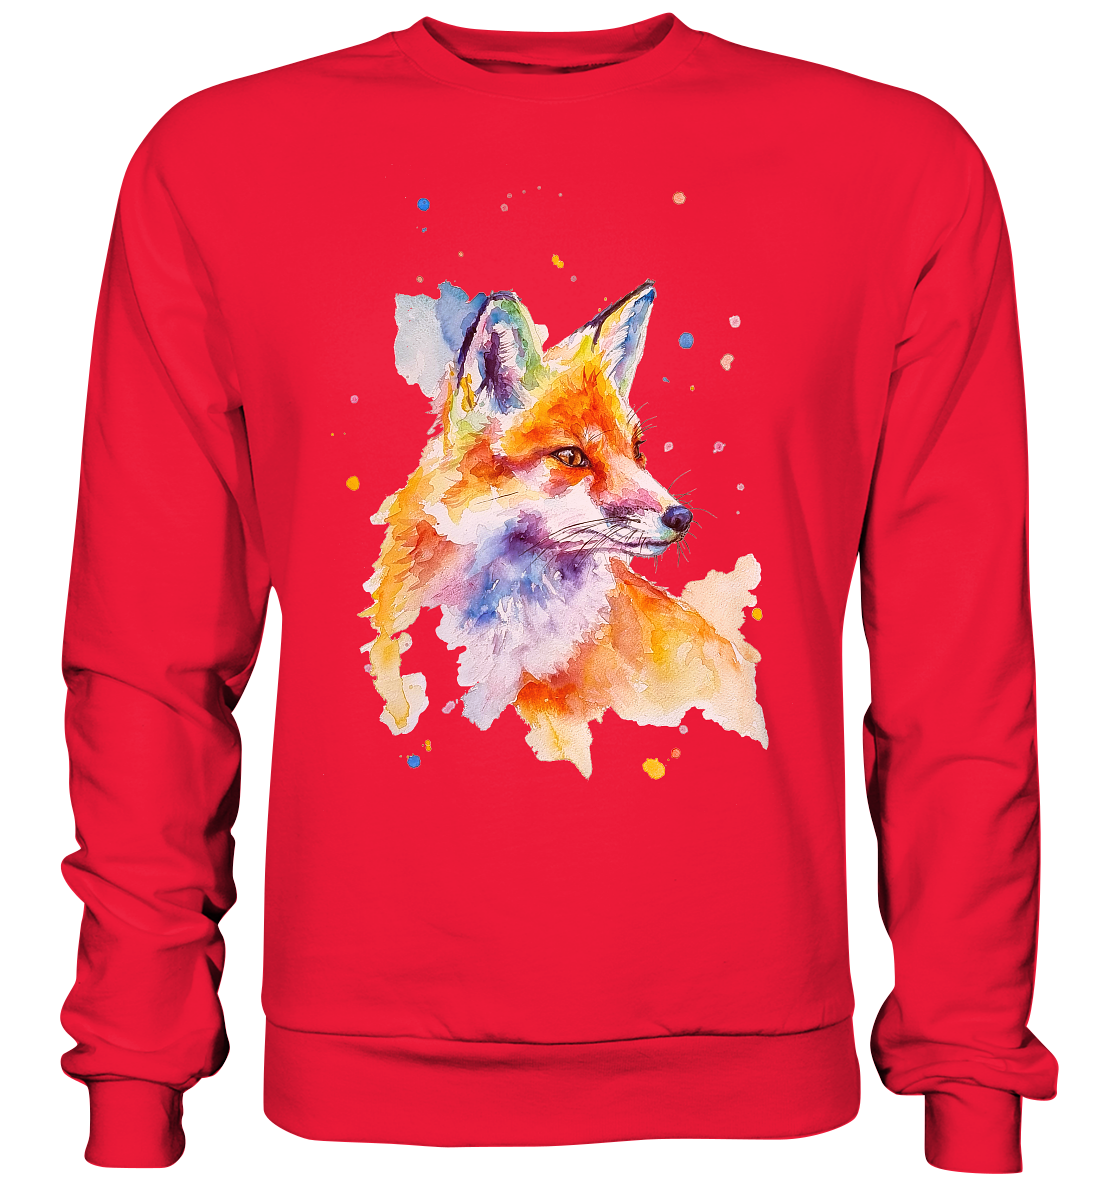 Bunter Fuchs - Premium Sweatshirt